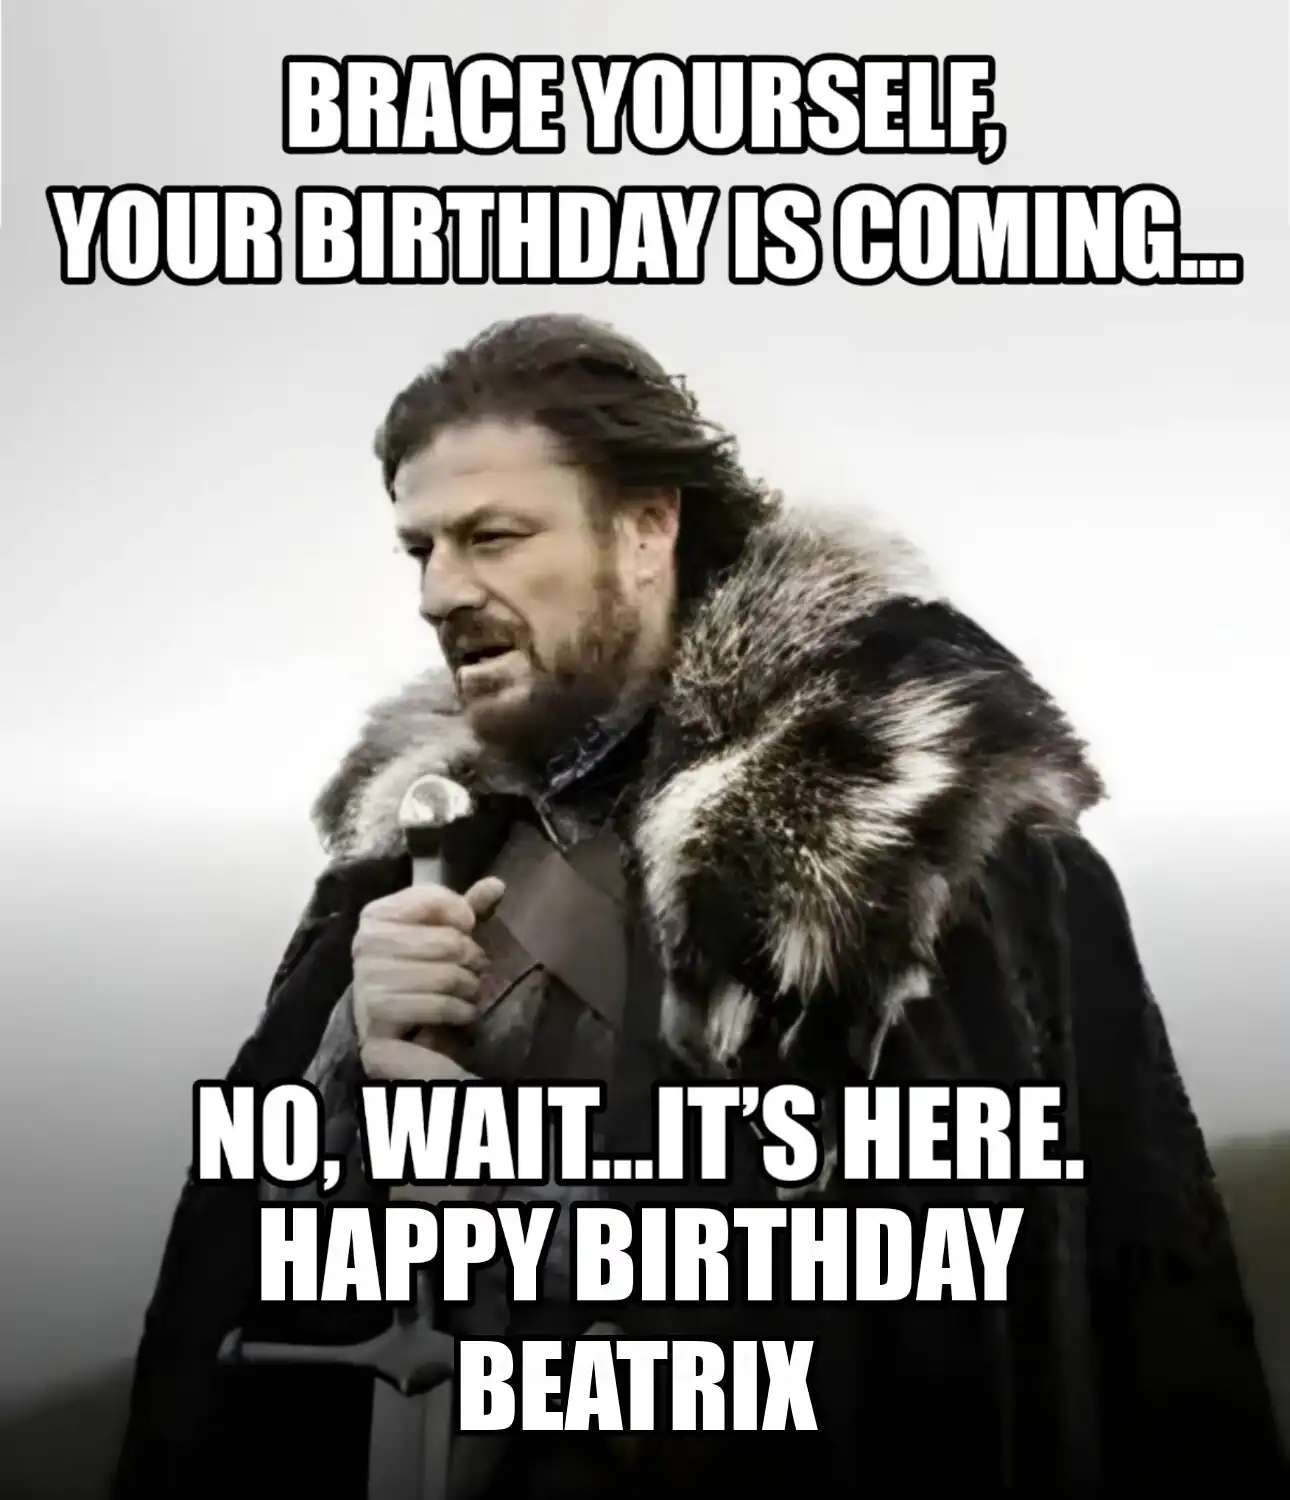 Happy Birthday Beatrix Brace Yourself Your Birthday Is Coming Meme